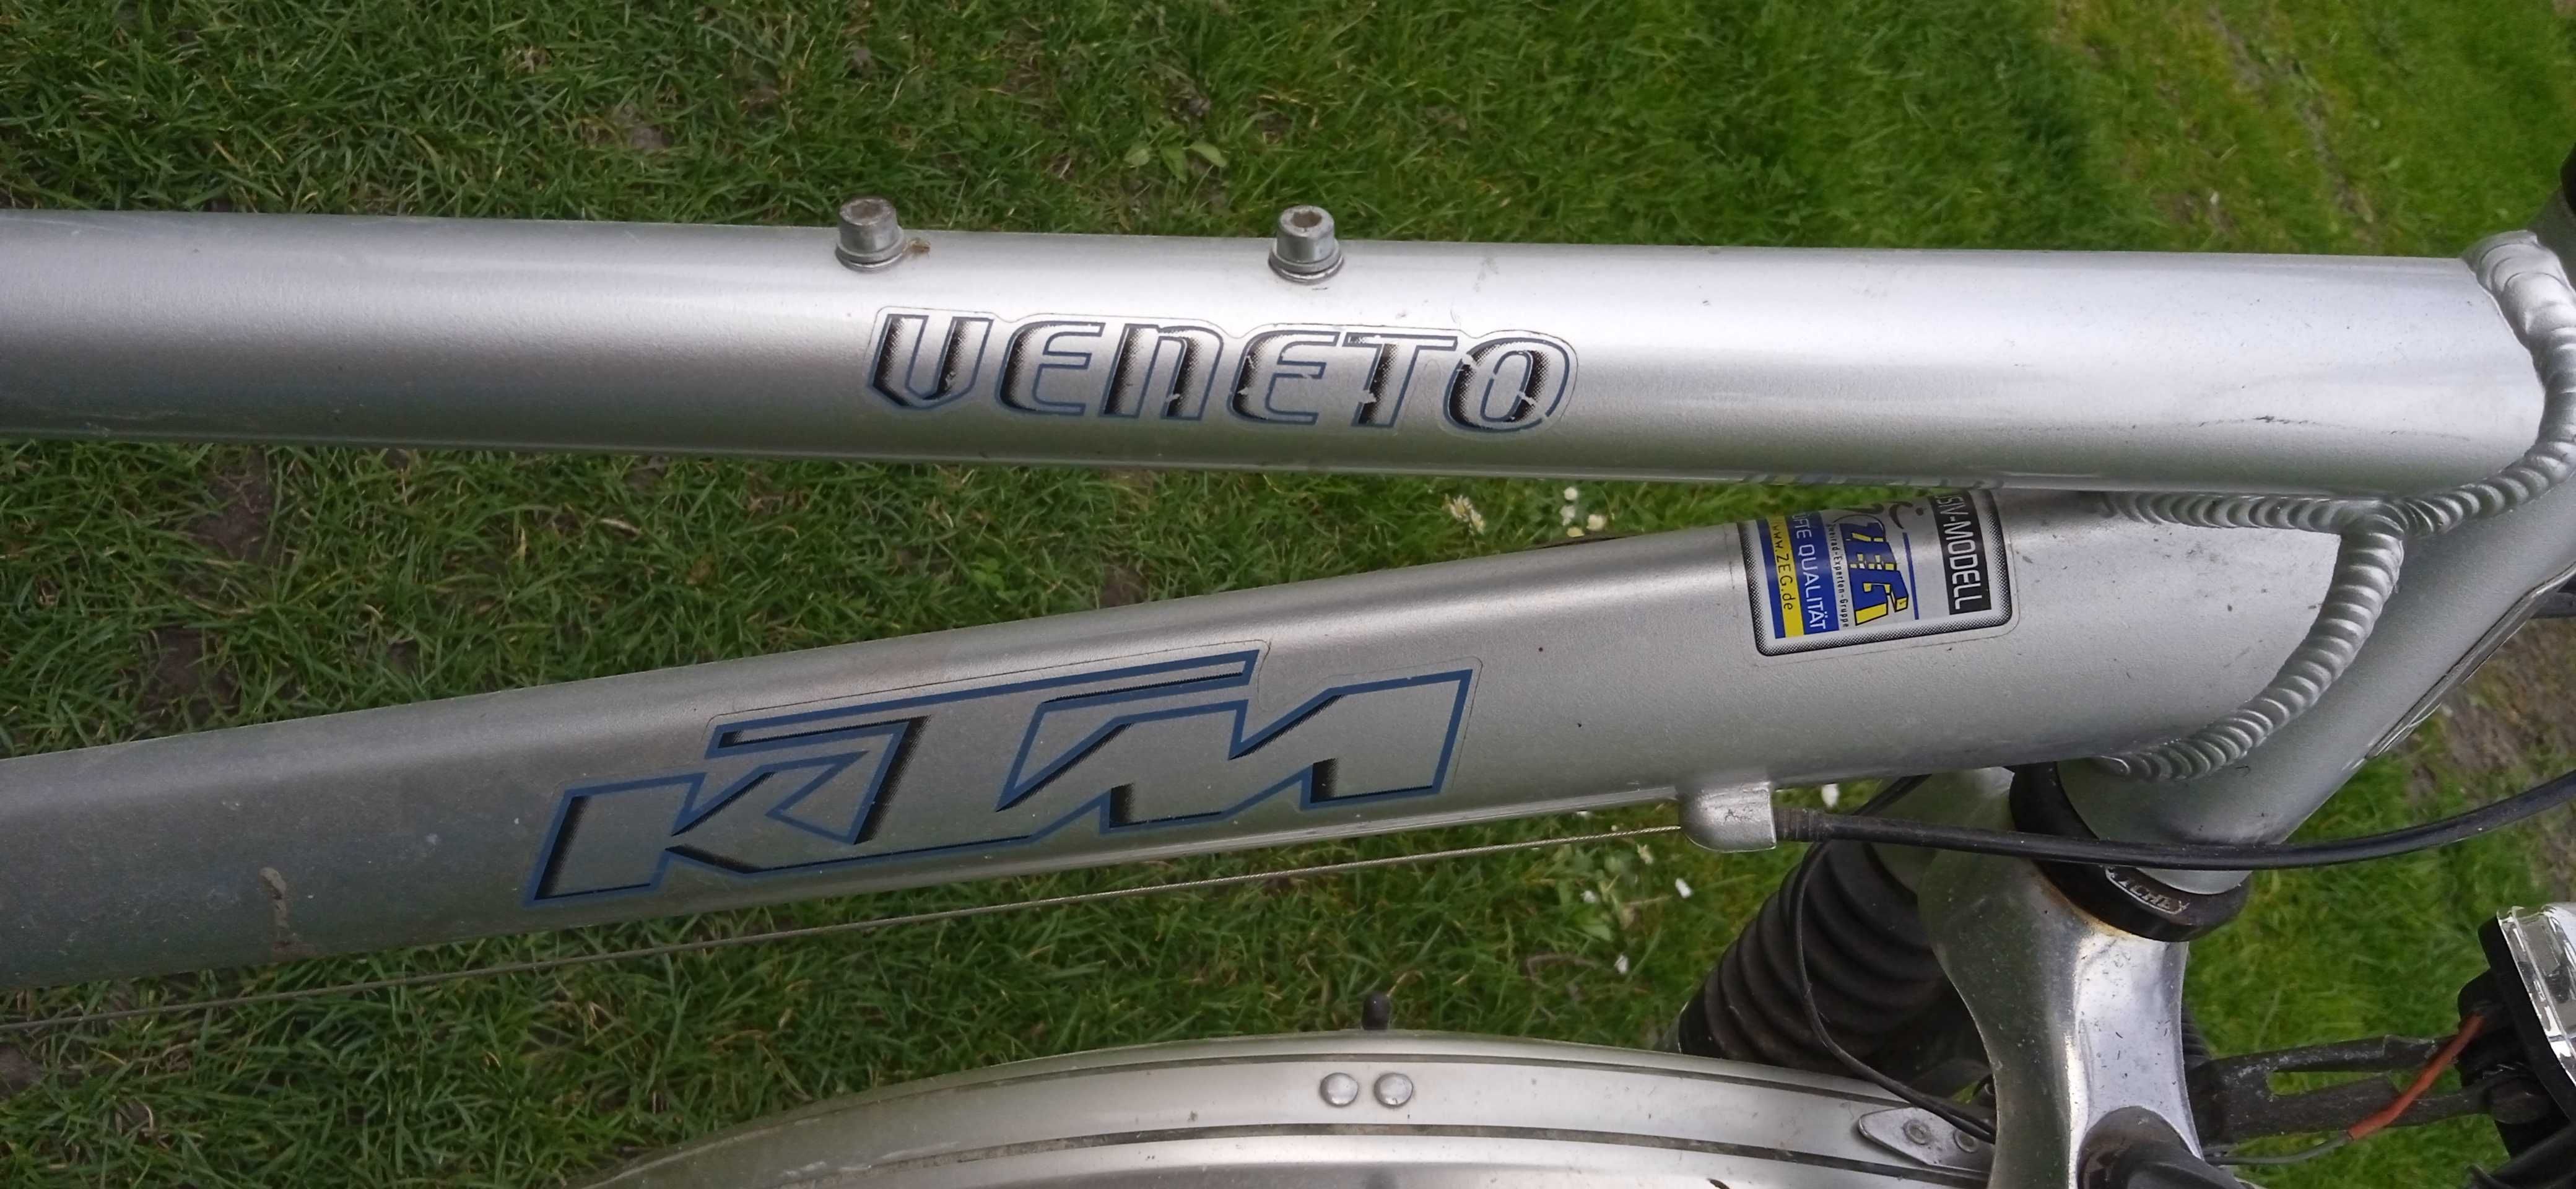 Rower KTM Veneto